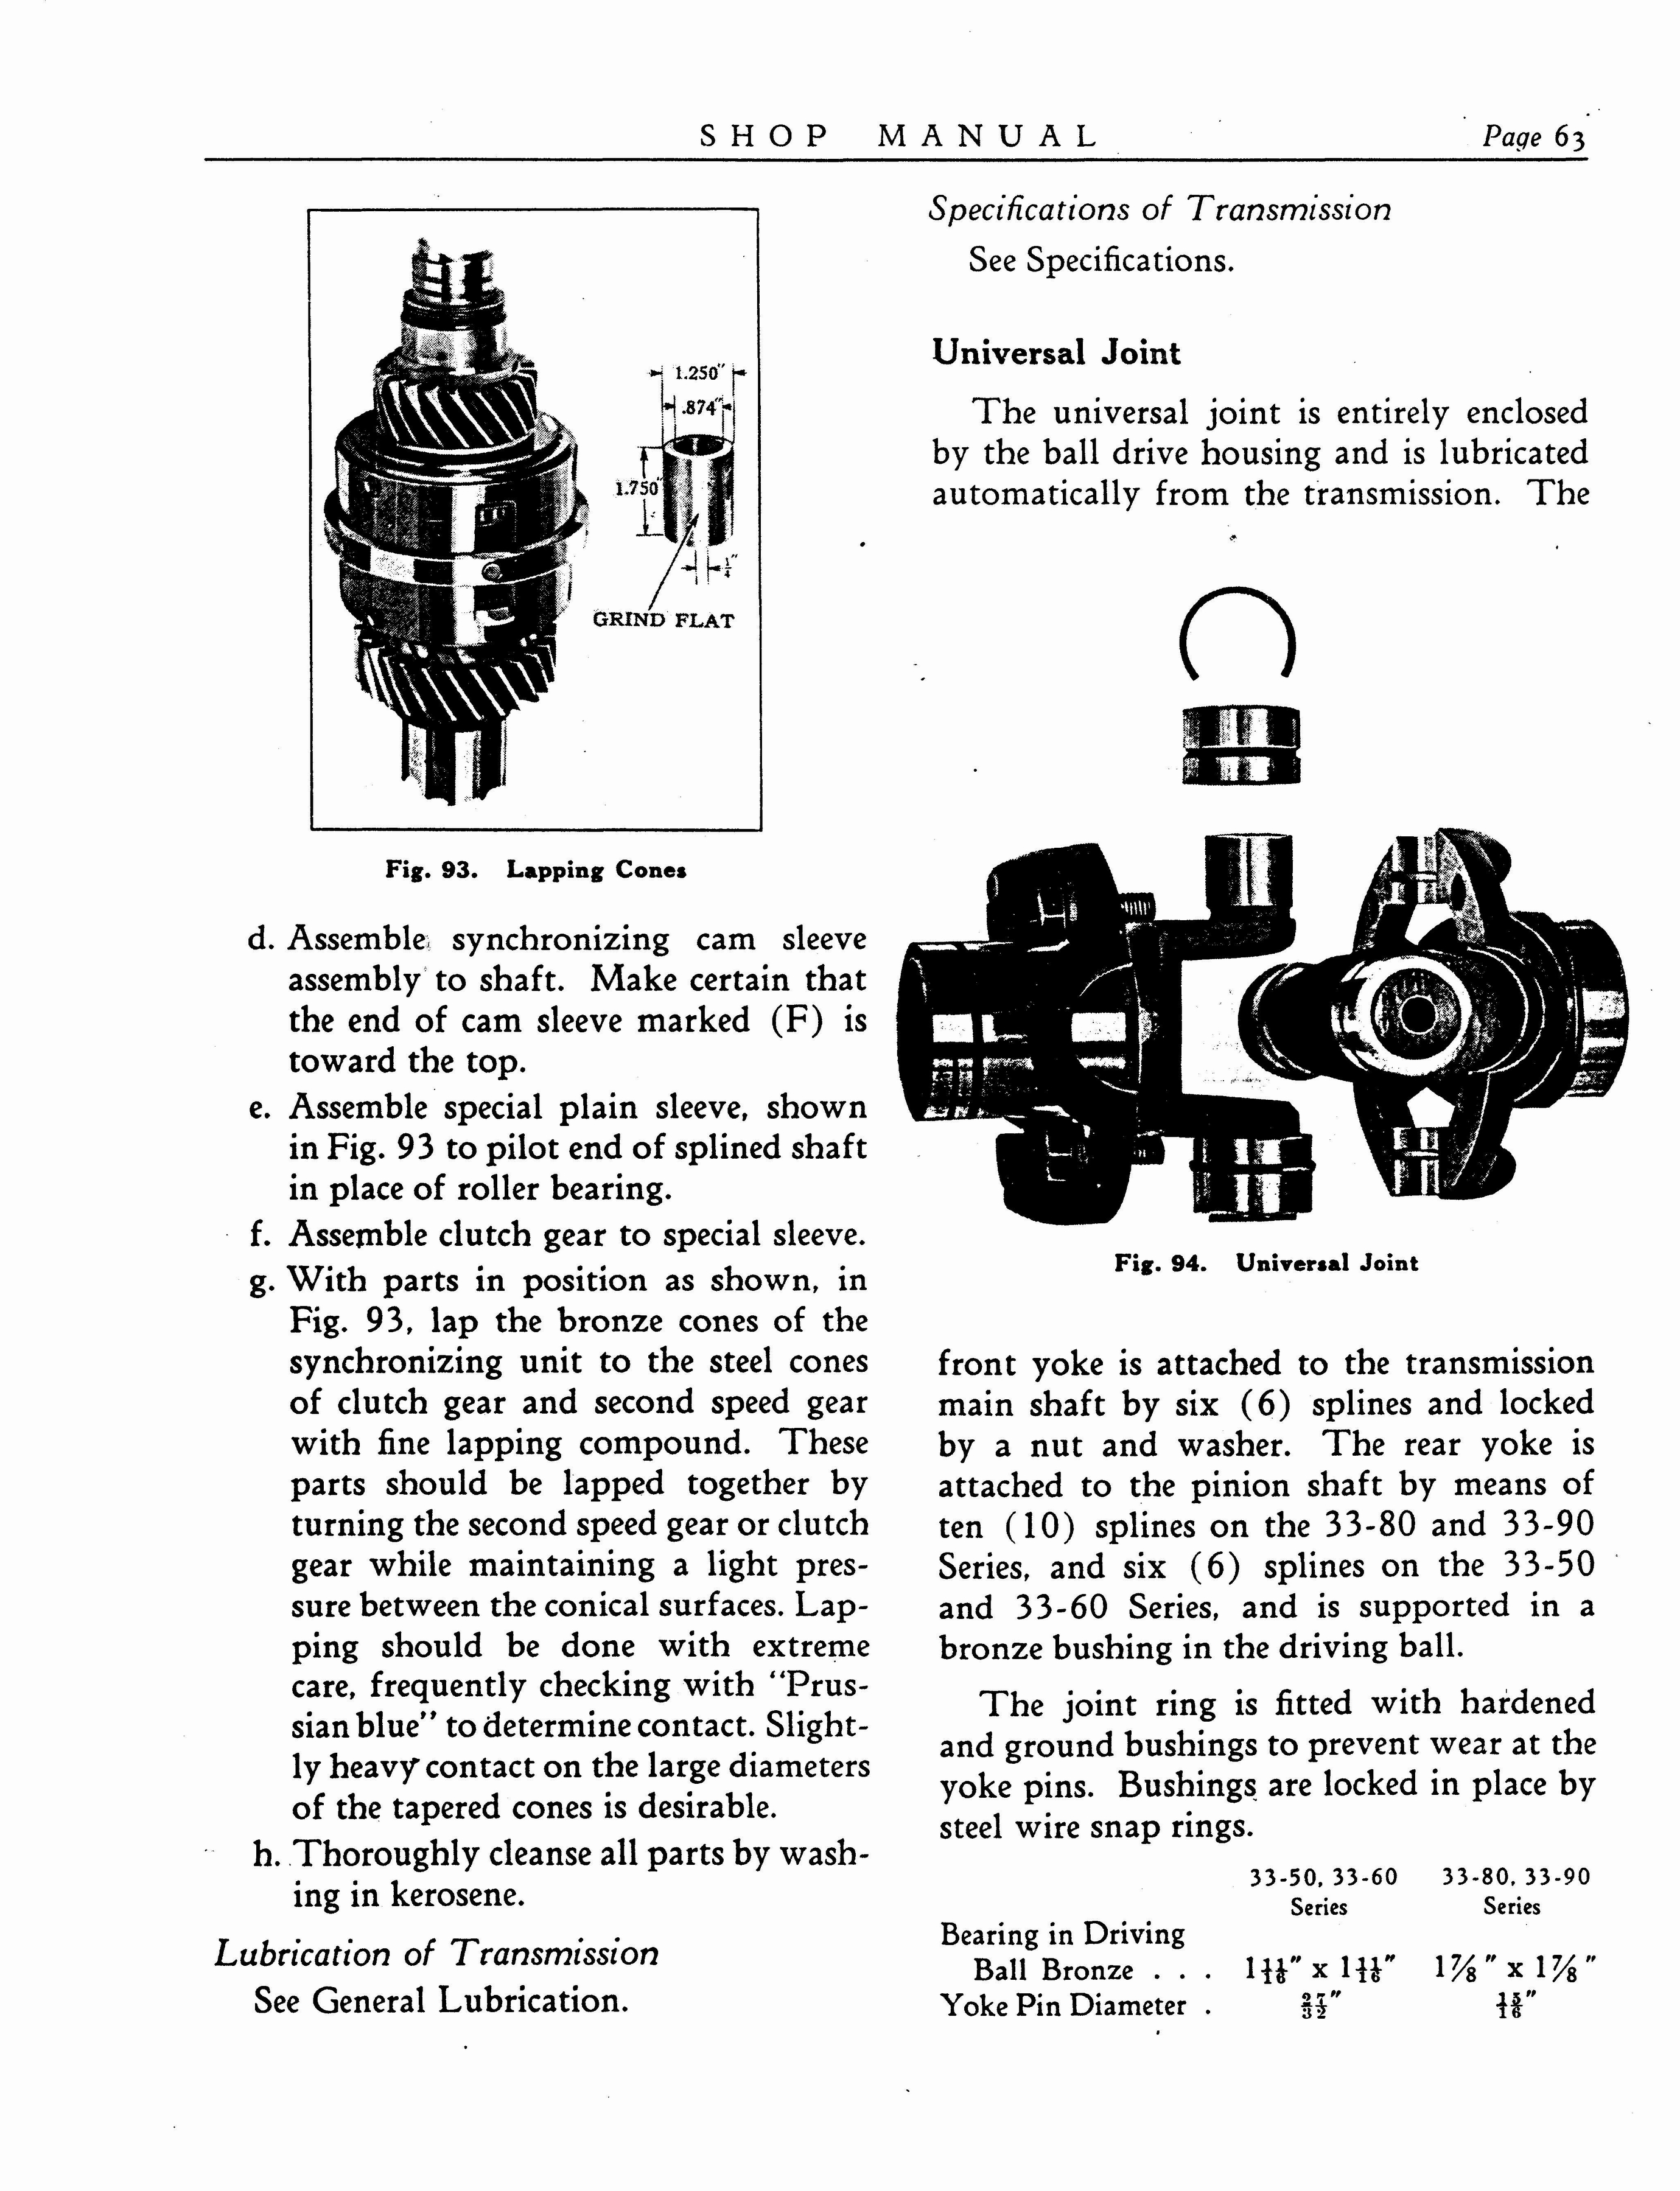 n_1933 Buick Shop Manual_Page_064.jpg